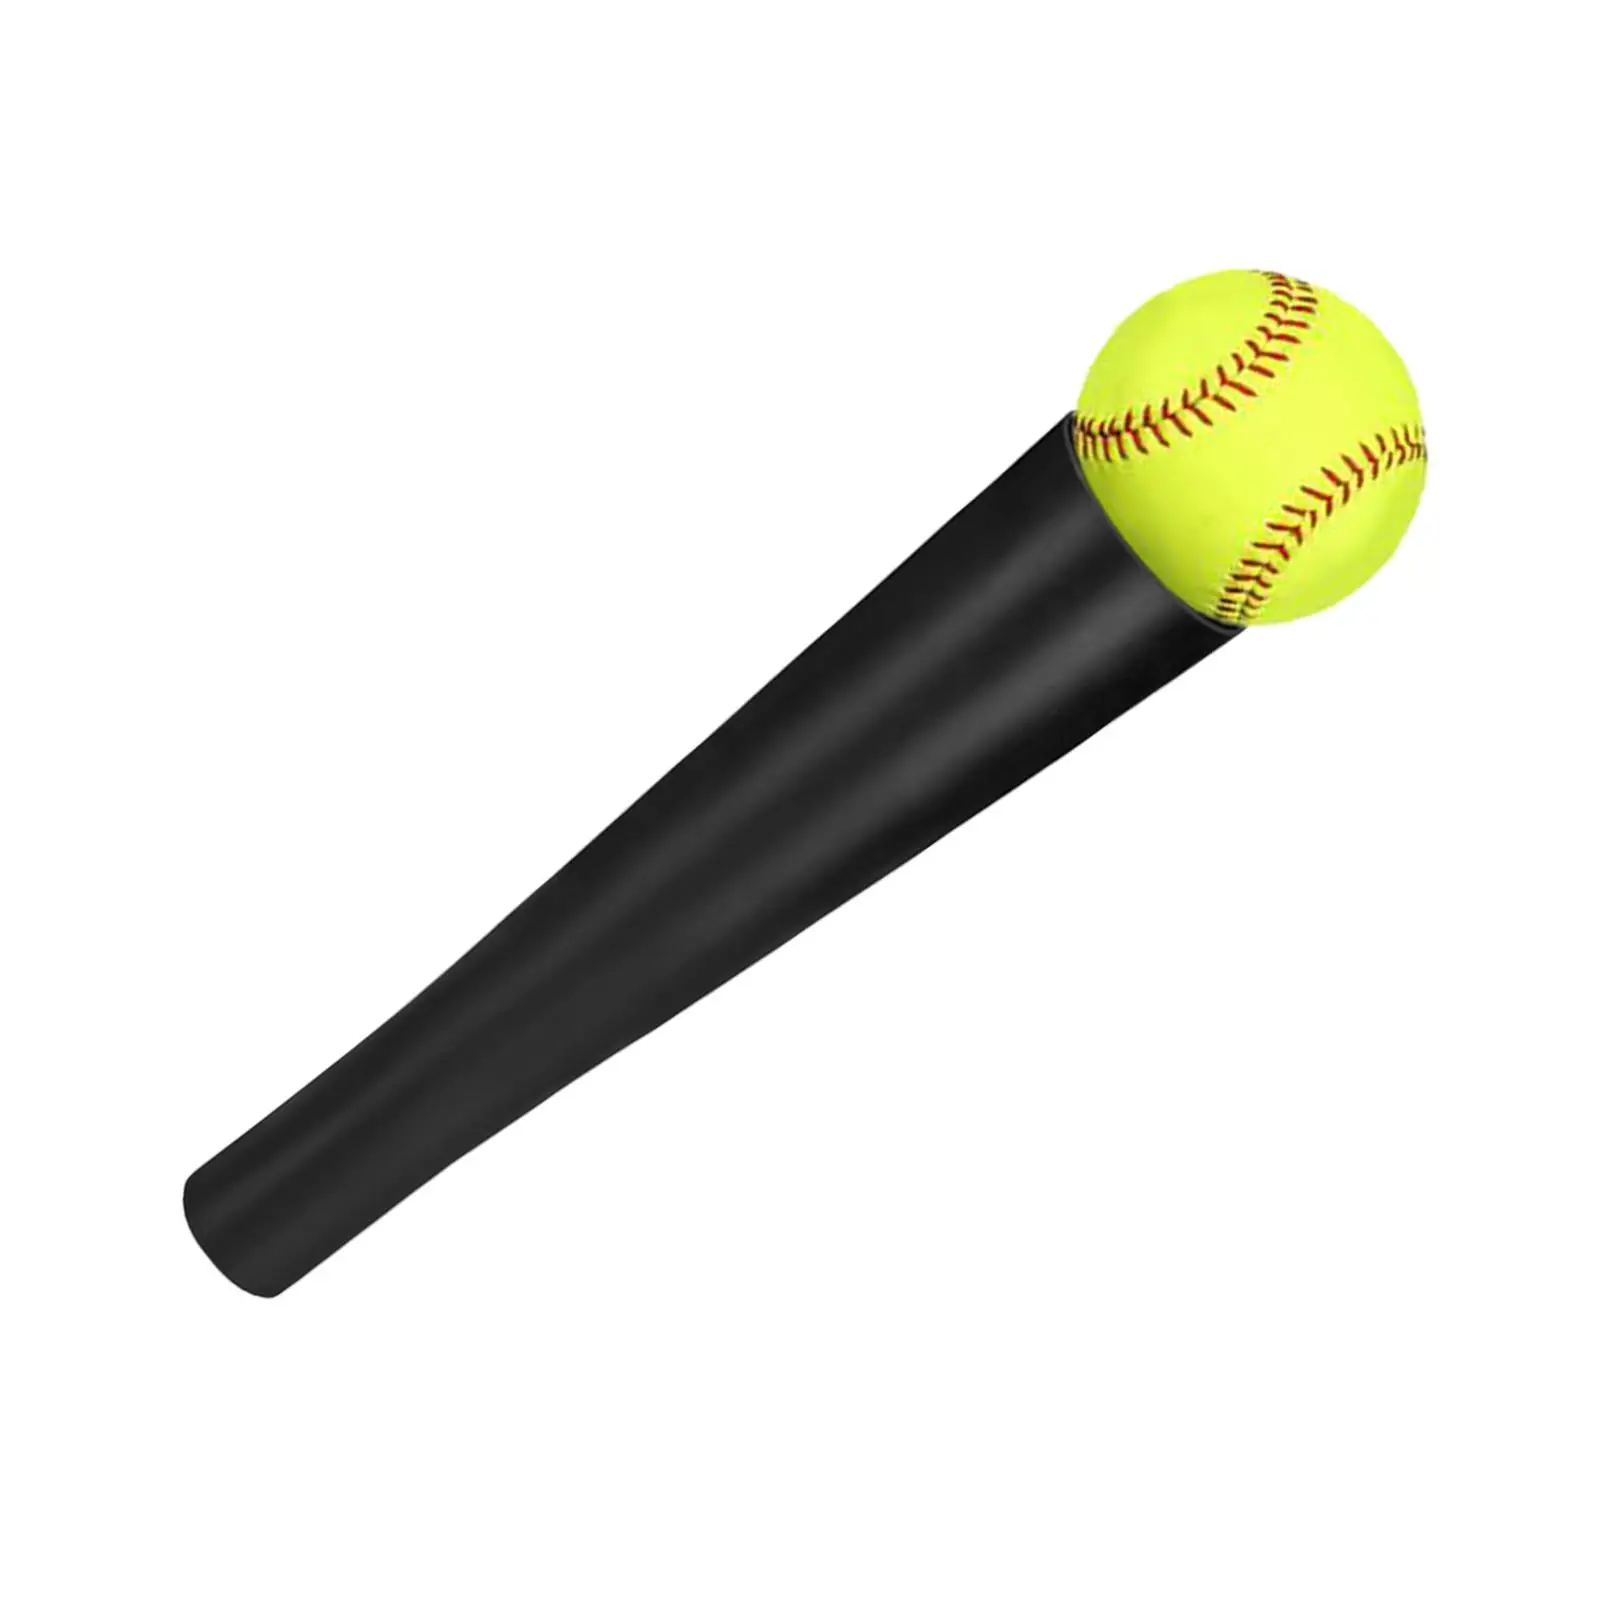 1 Piece Batting Tee Topper Ball Stand Rubber Holder Training Equipment Baseball Softball Easy to Install